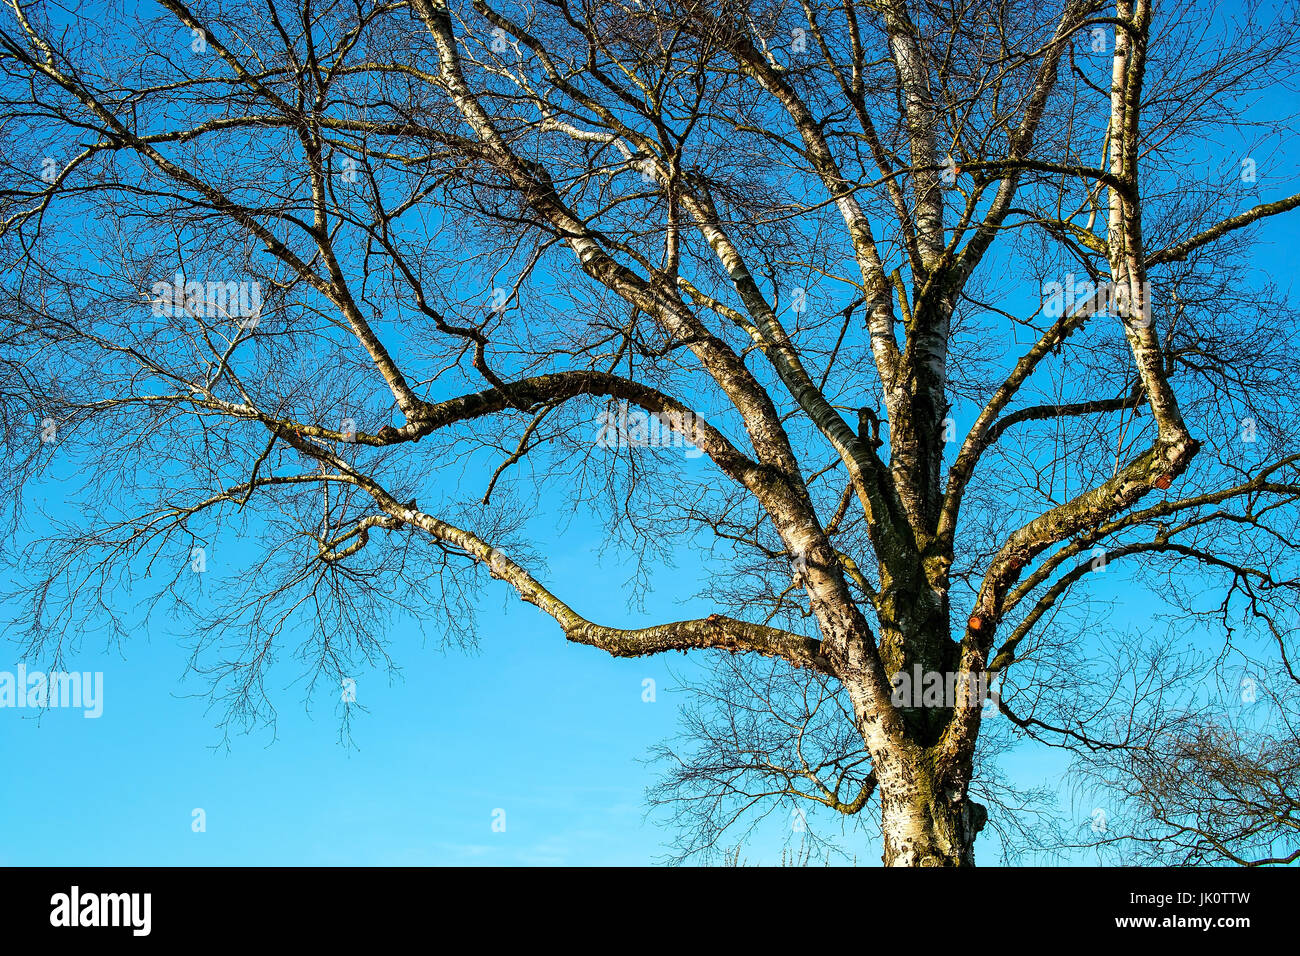 bereits kahlen Hang Birke unter blauem Himmel im späten Herbst, Bereits Kahle Haengebirke Unter Blauem Himmel Im spaetherbst Stockfoto